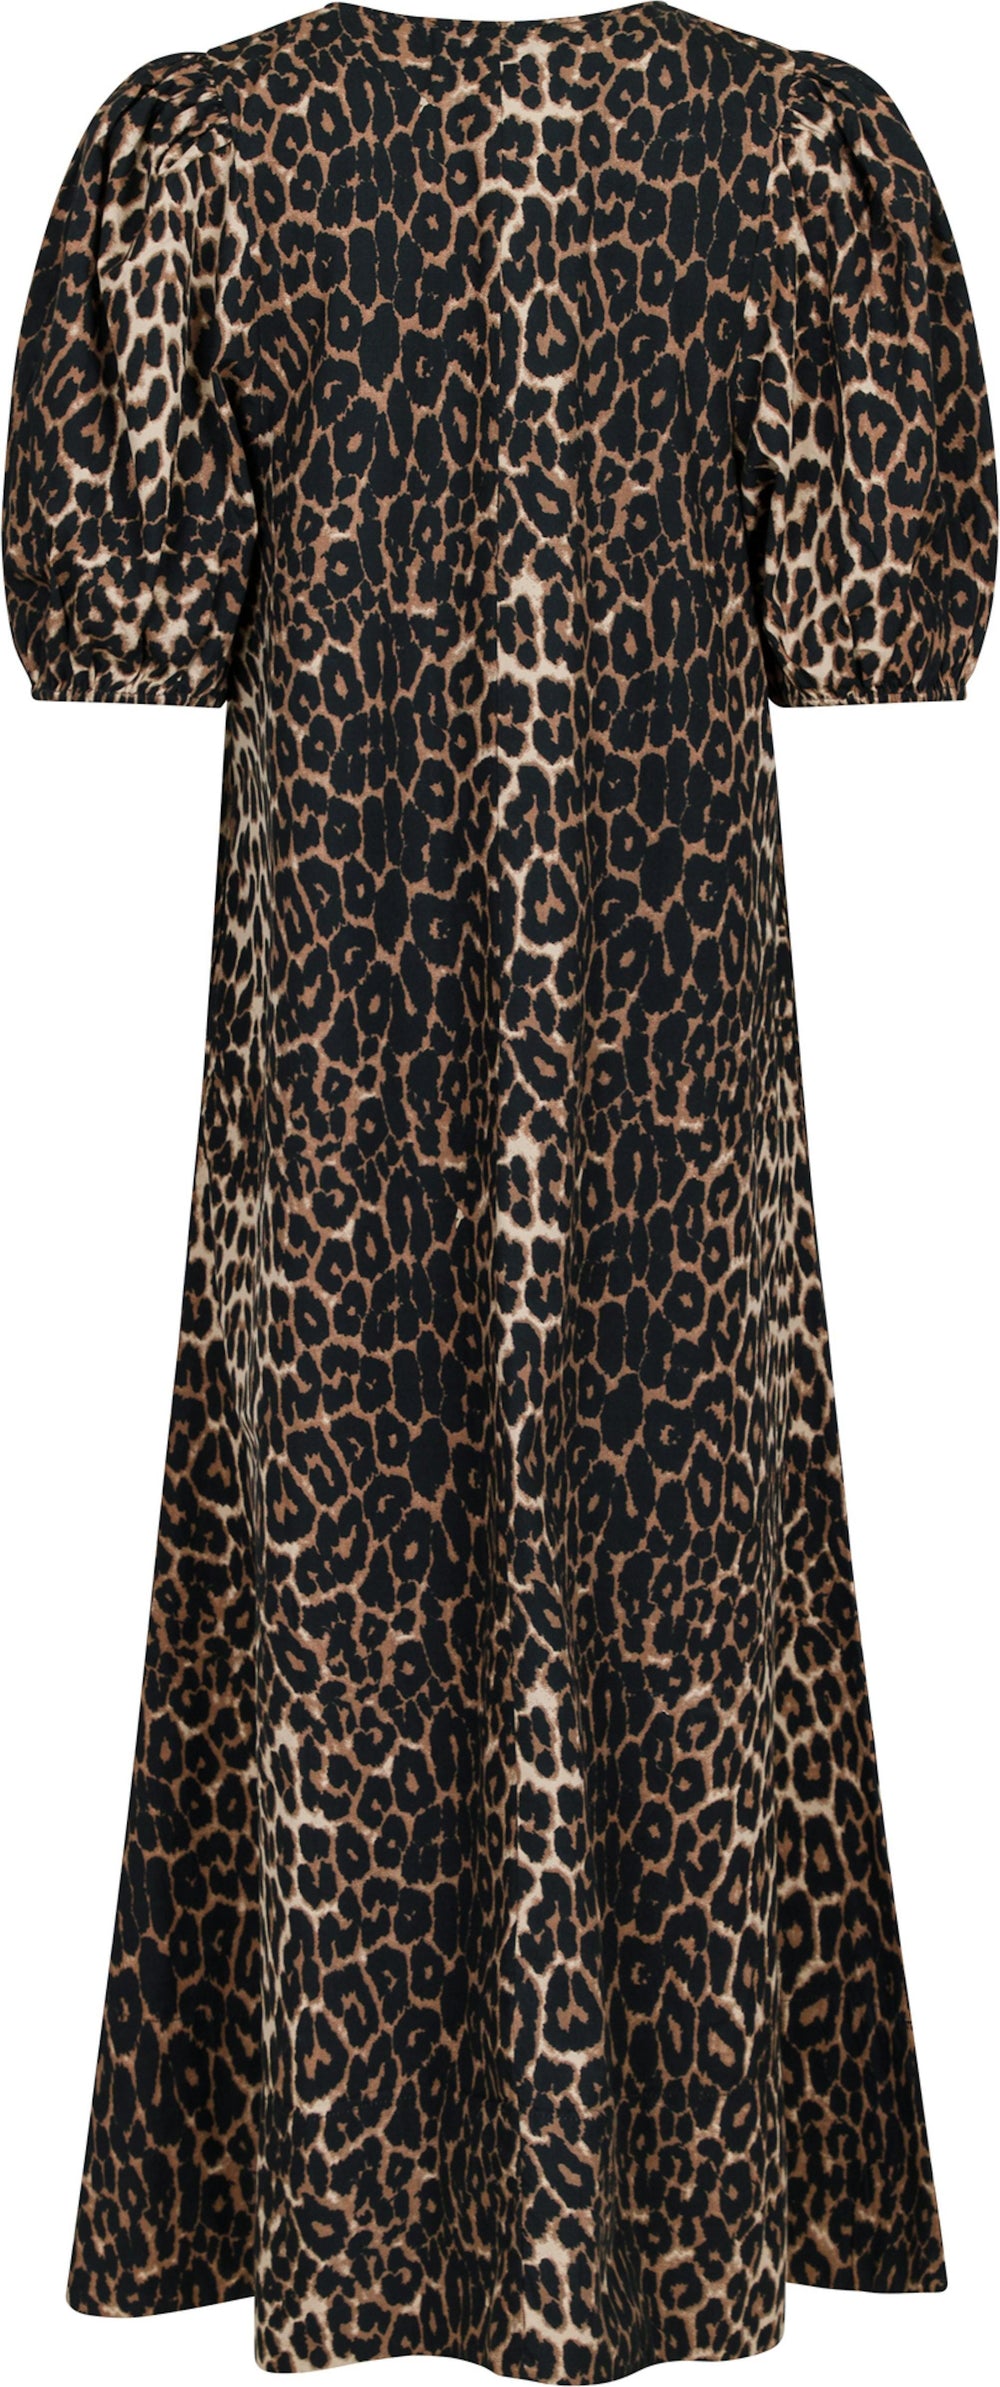 Neo Noir - Bobbie Leo Dress - Leopard